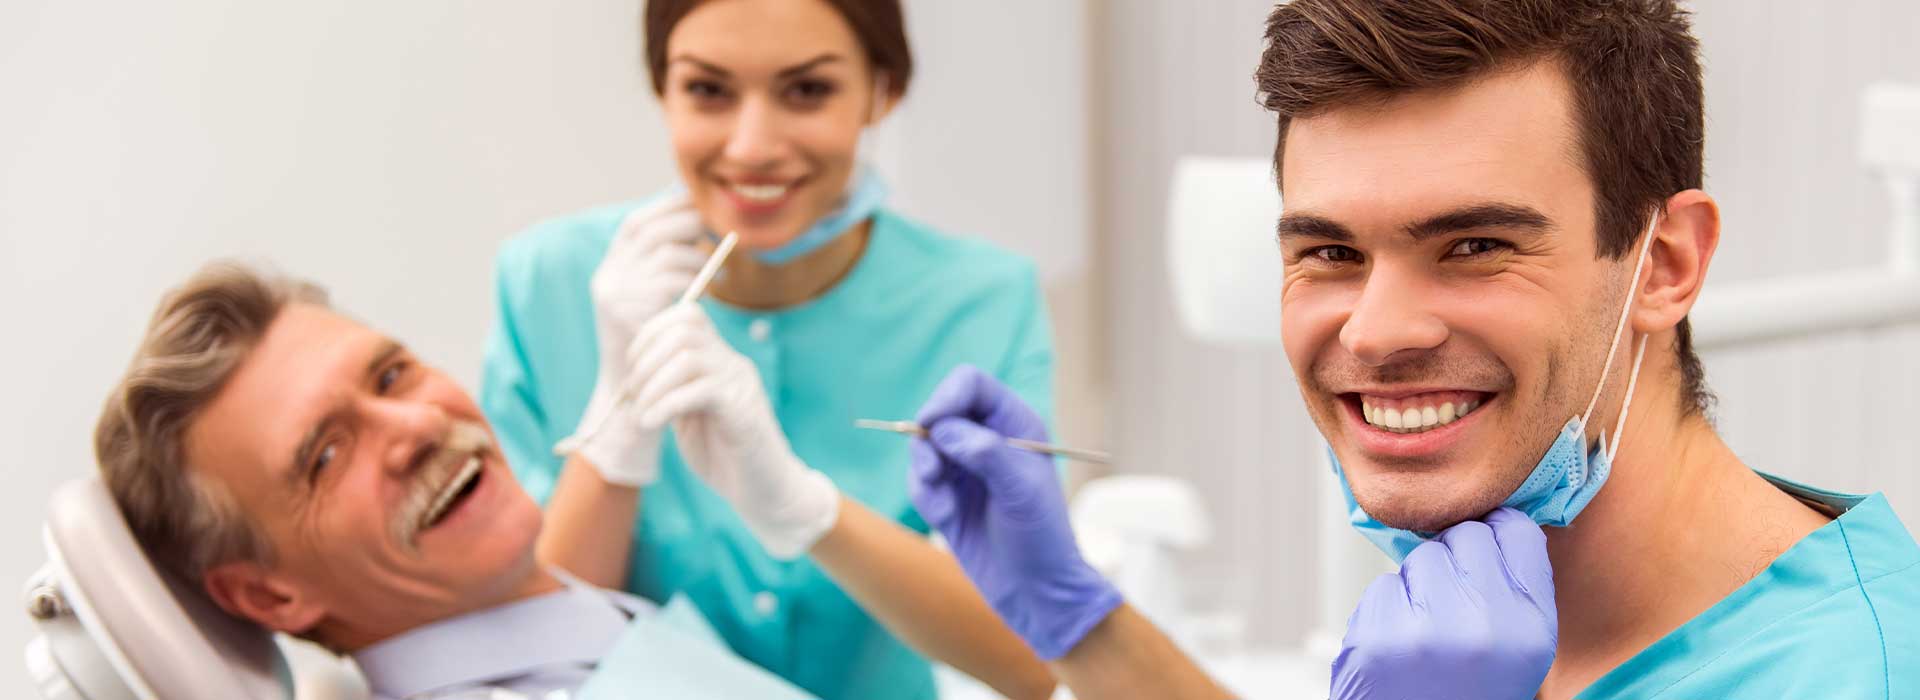 Dentists doing dental restoration treatment for patient